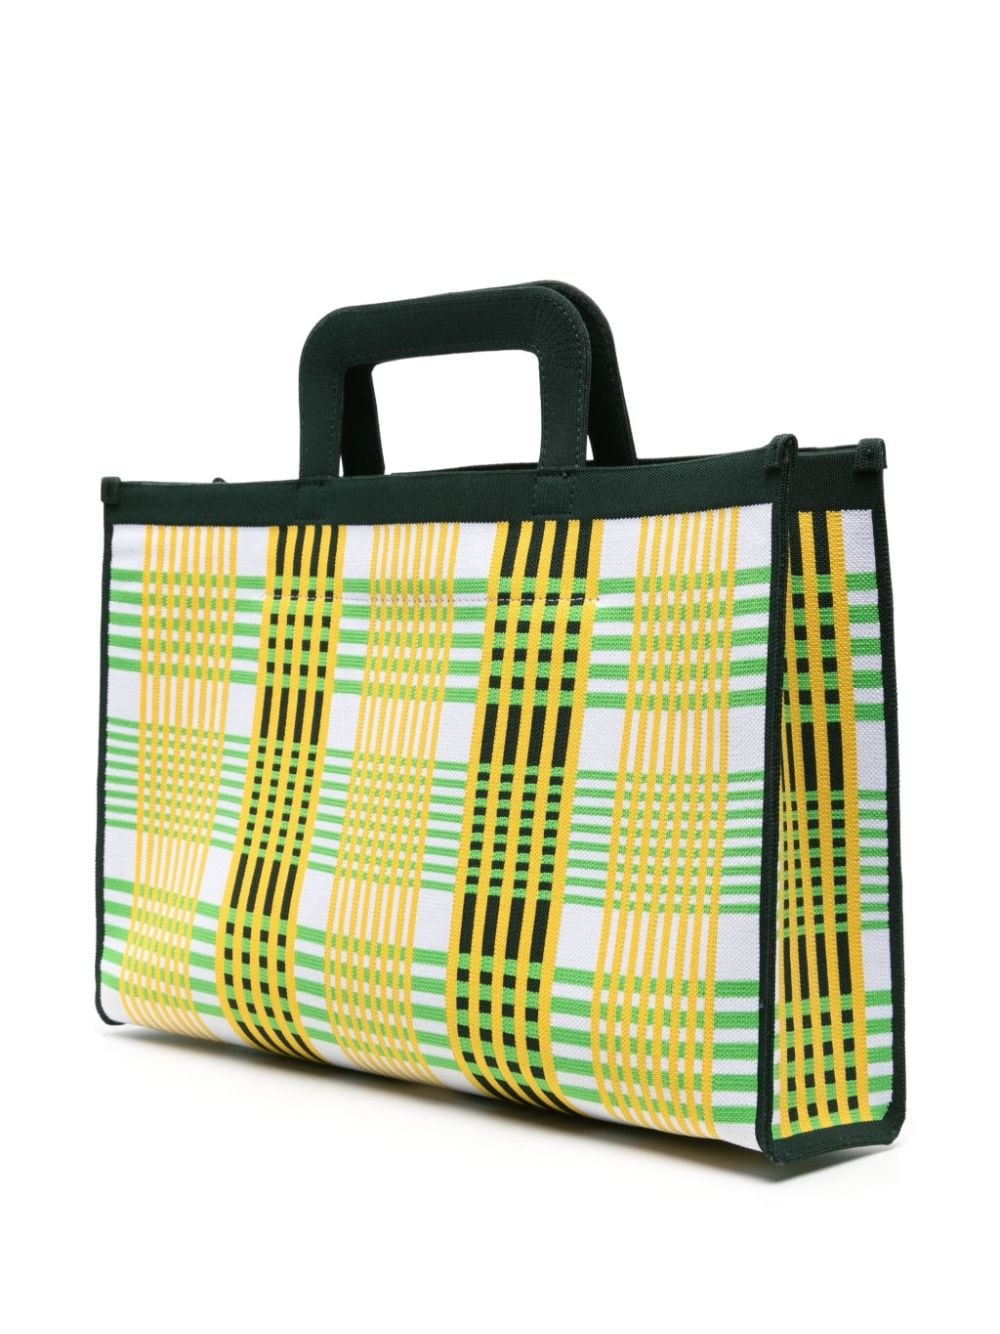 plaid-pattern tote bag - 3